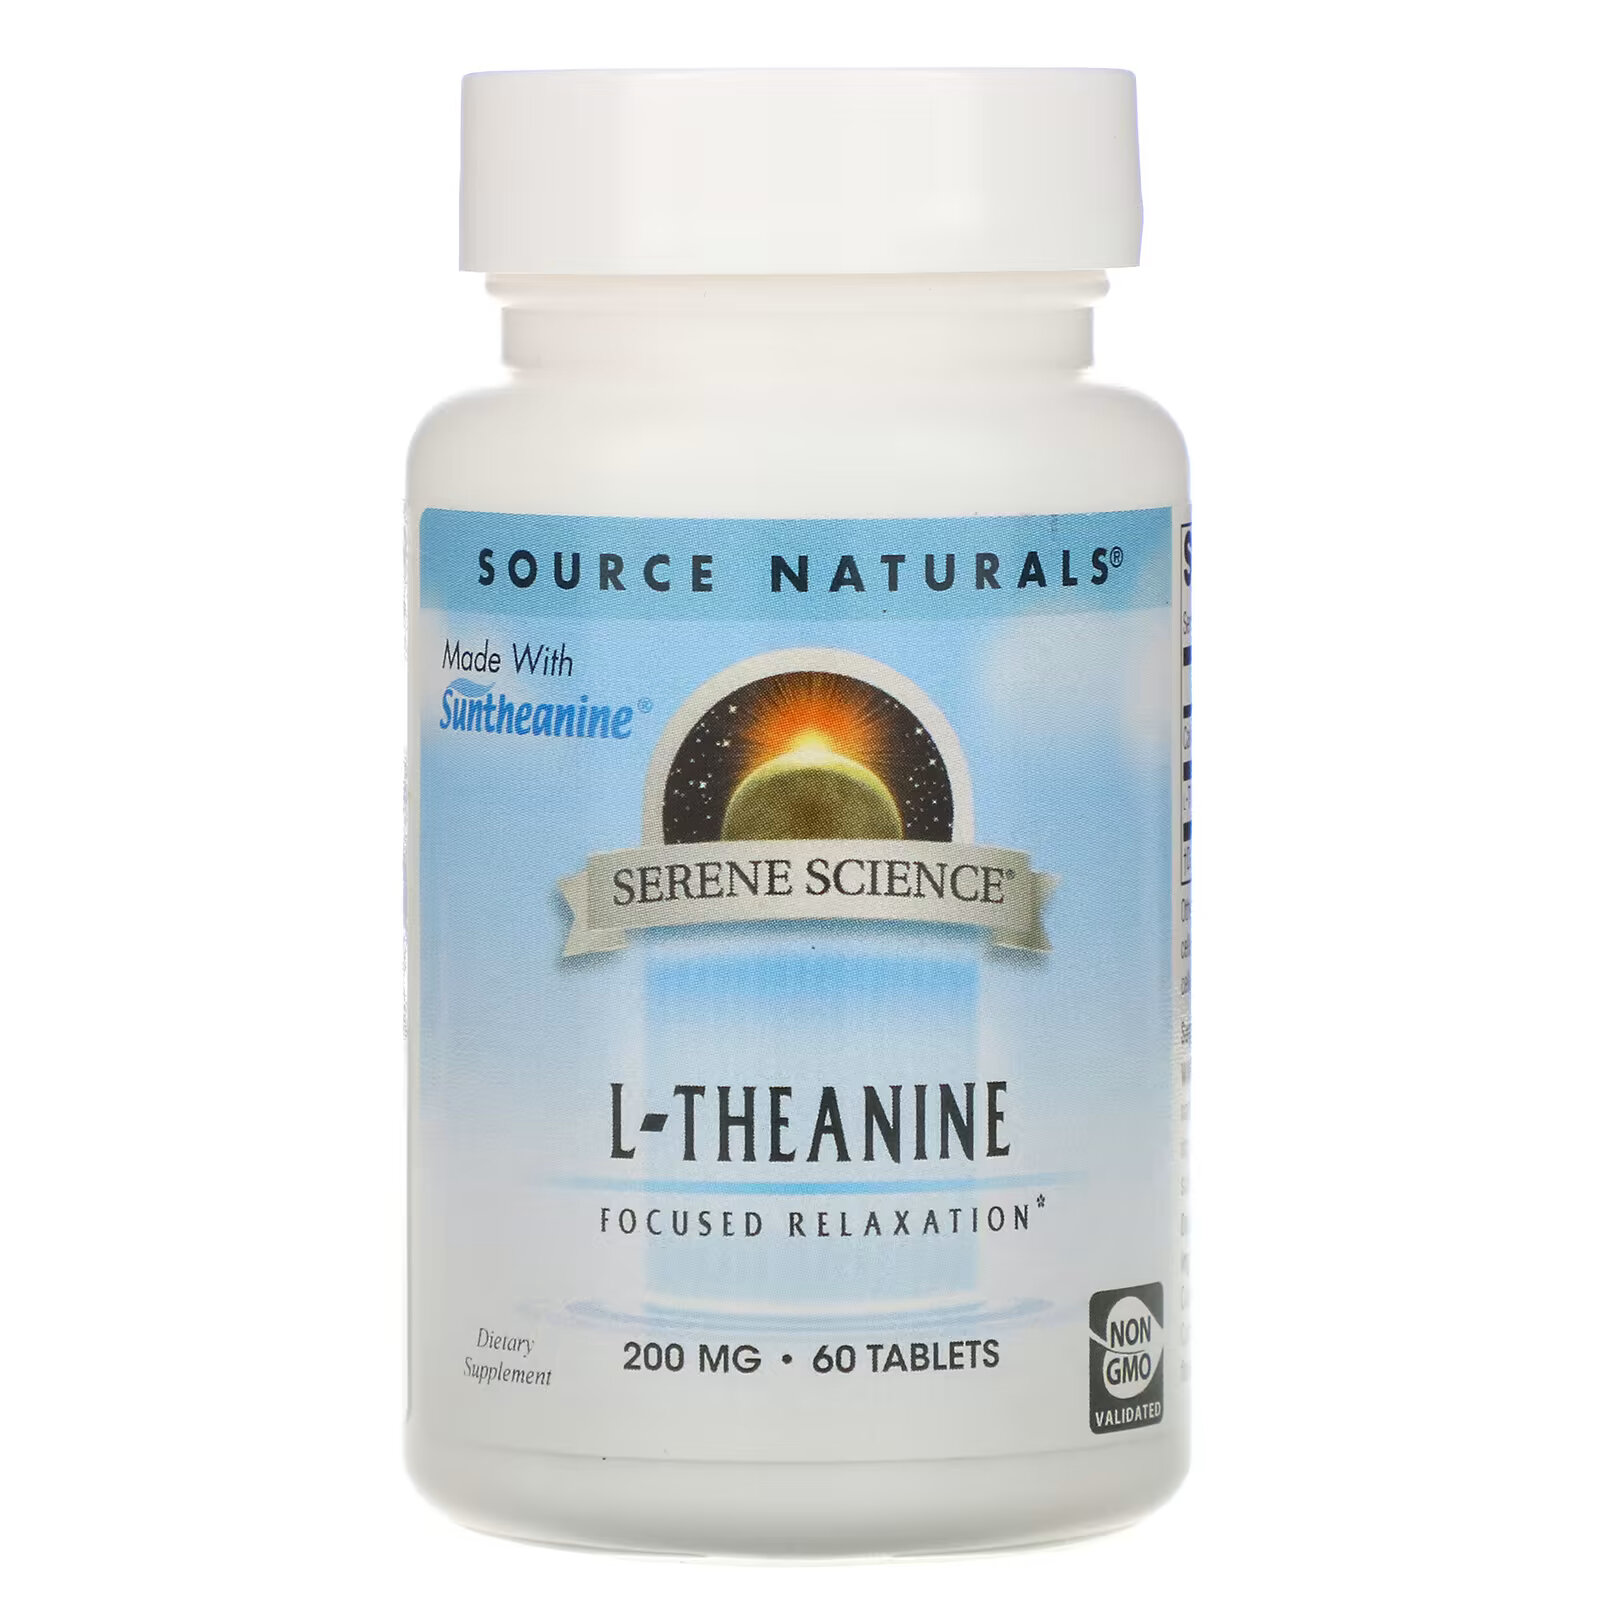 source naturals serene science l теанин 200 мг 60 капсул Source Naturals, L-теанин, 200 мг, 60 таблеток